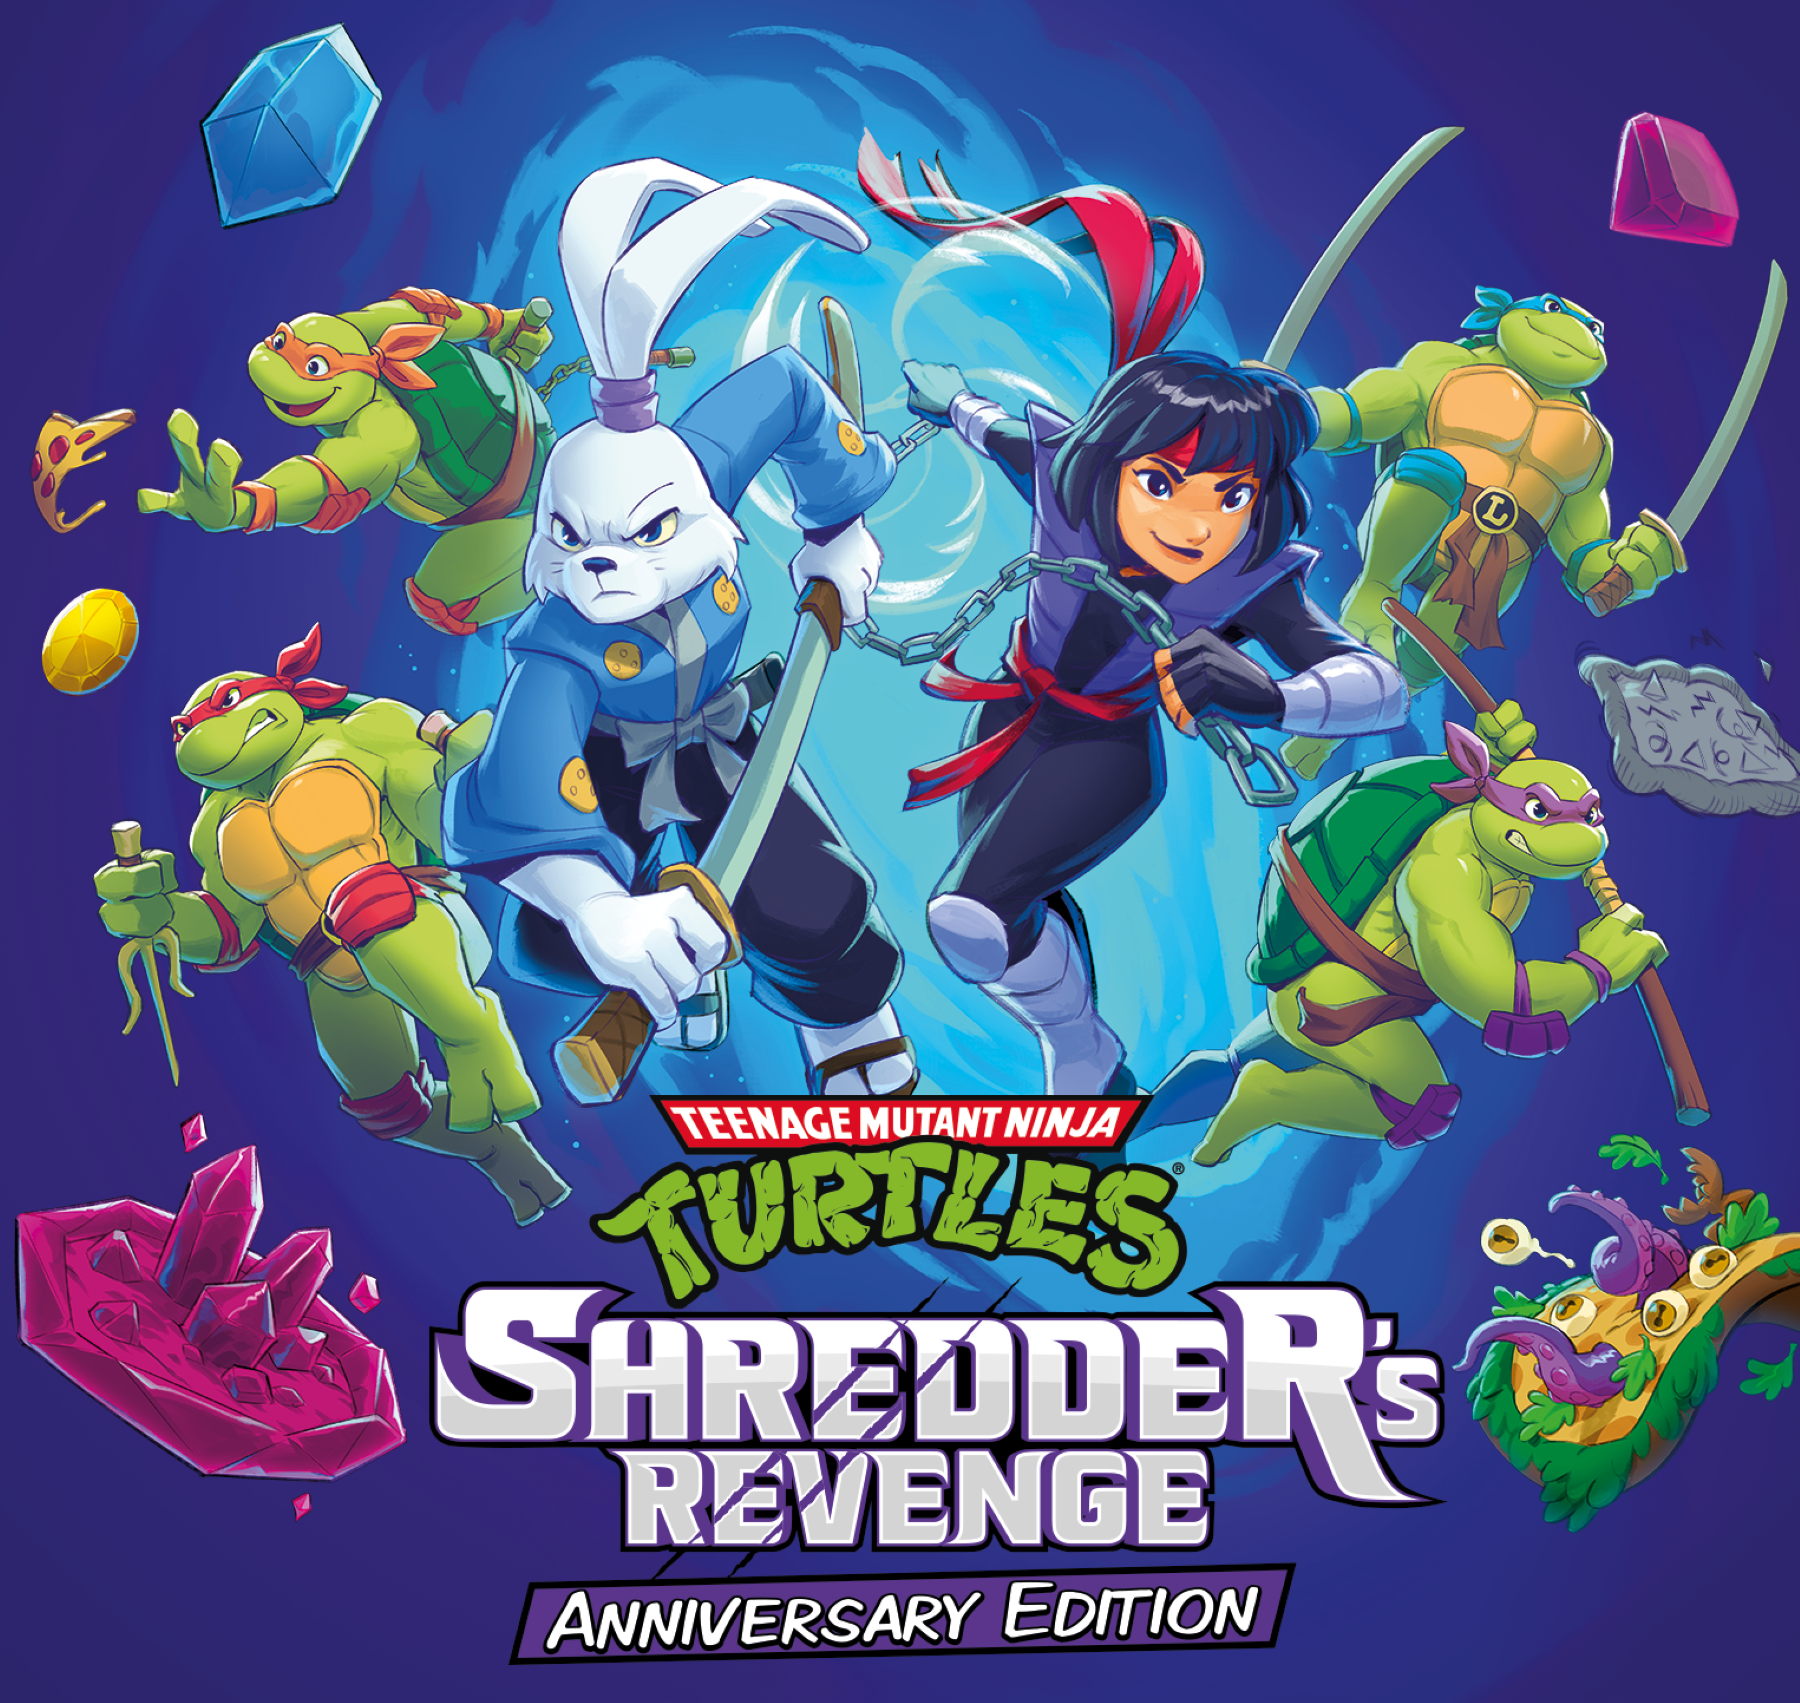 ‘Teenage Mutant Ninja Turtles: Shredder’s Revenge’ Anniversary Edition Physical Versions on PS4, PS5 & Nintendo Switch For EU, ME, AUS & NZ Players! 